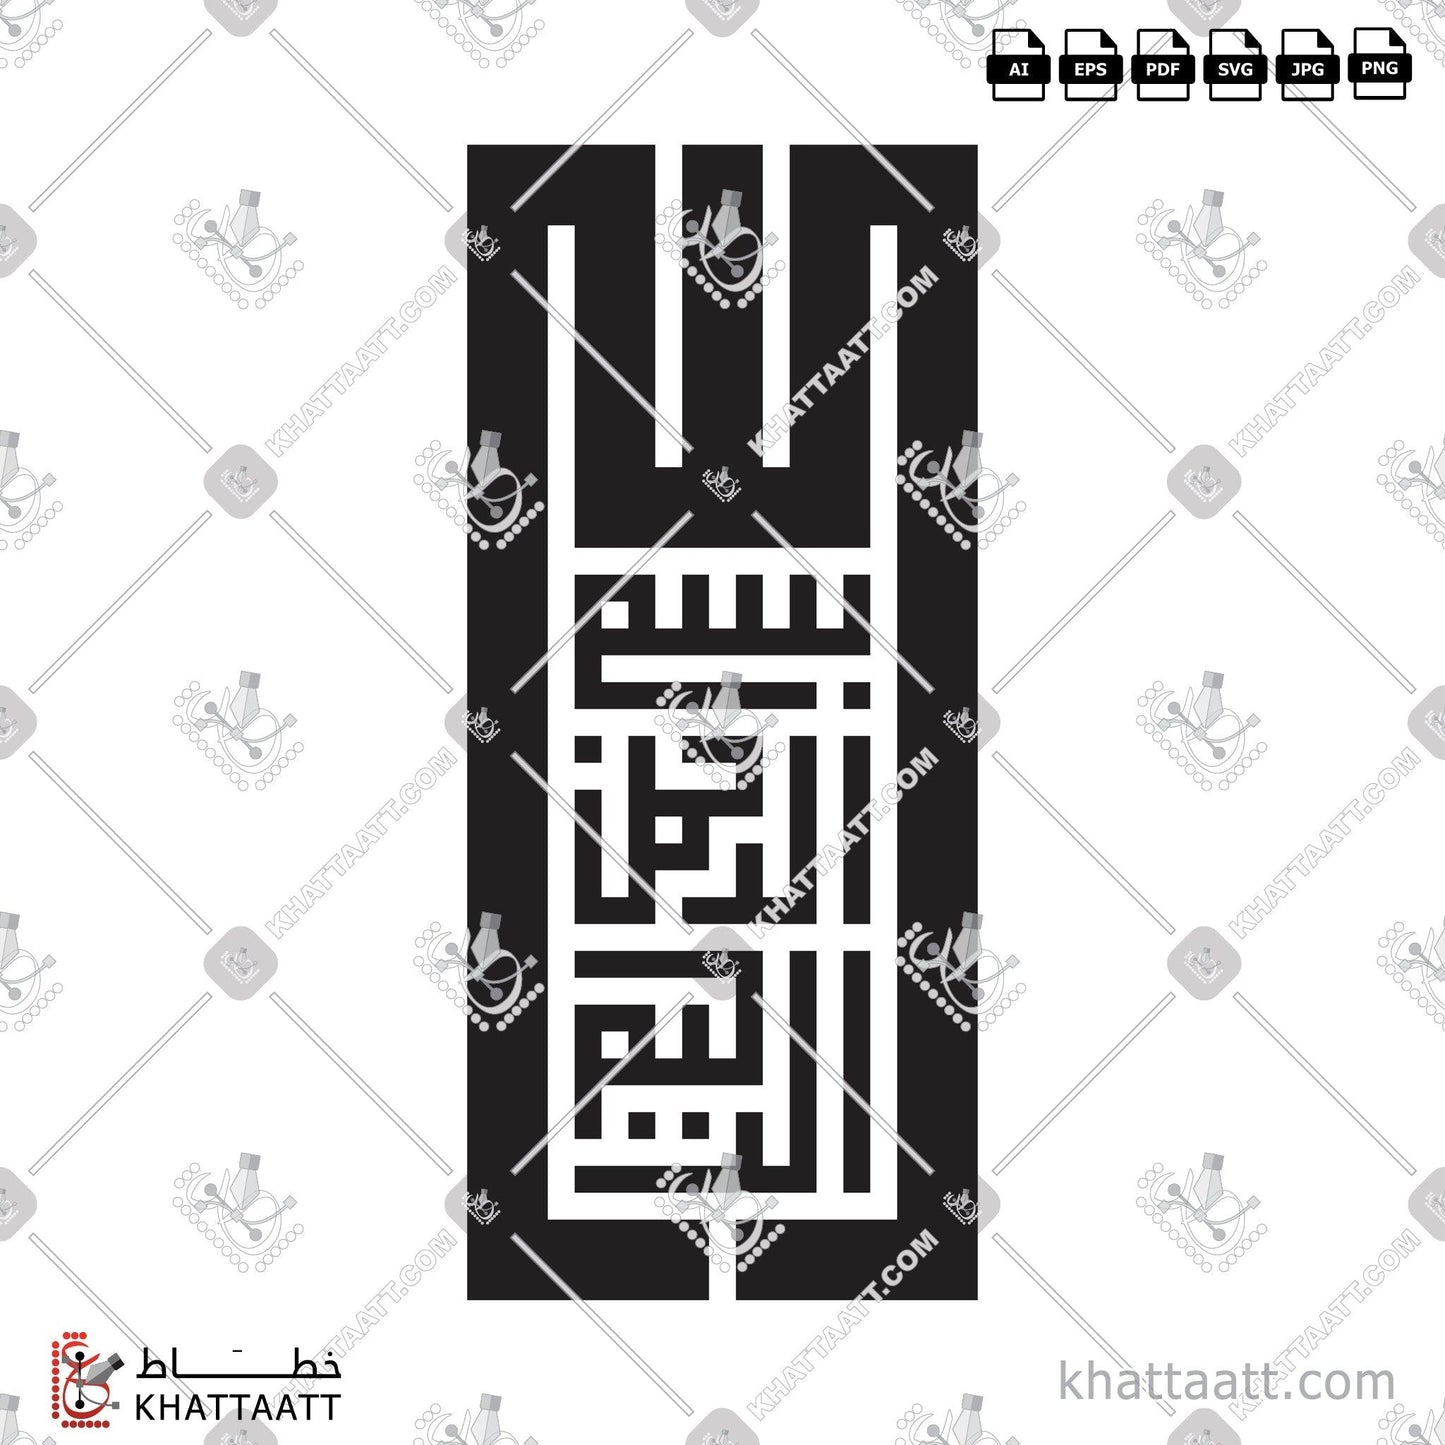 Download Arabic Calligraphy of بسم الله الرحمن الرحيم in Kufi - الخط الكوفي in vector and .png